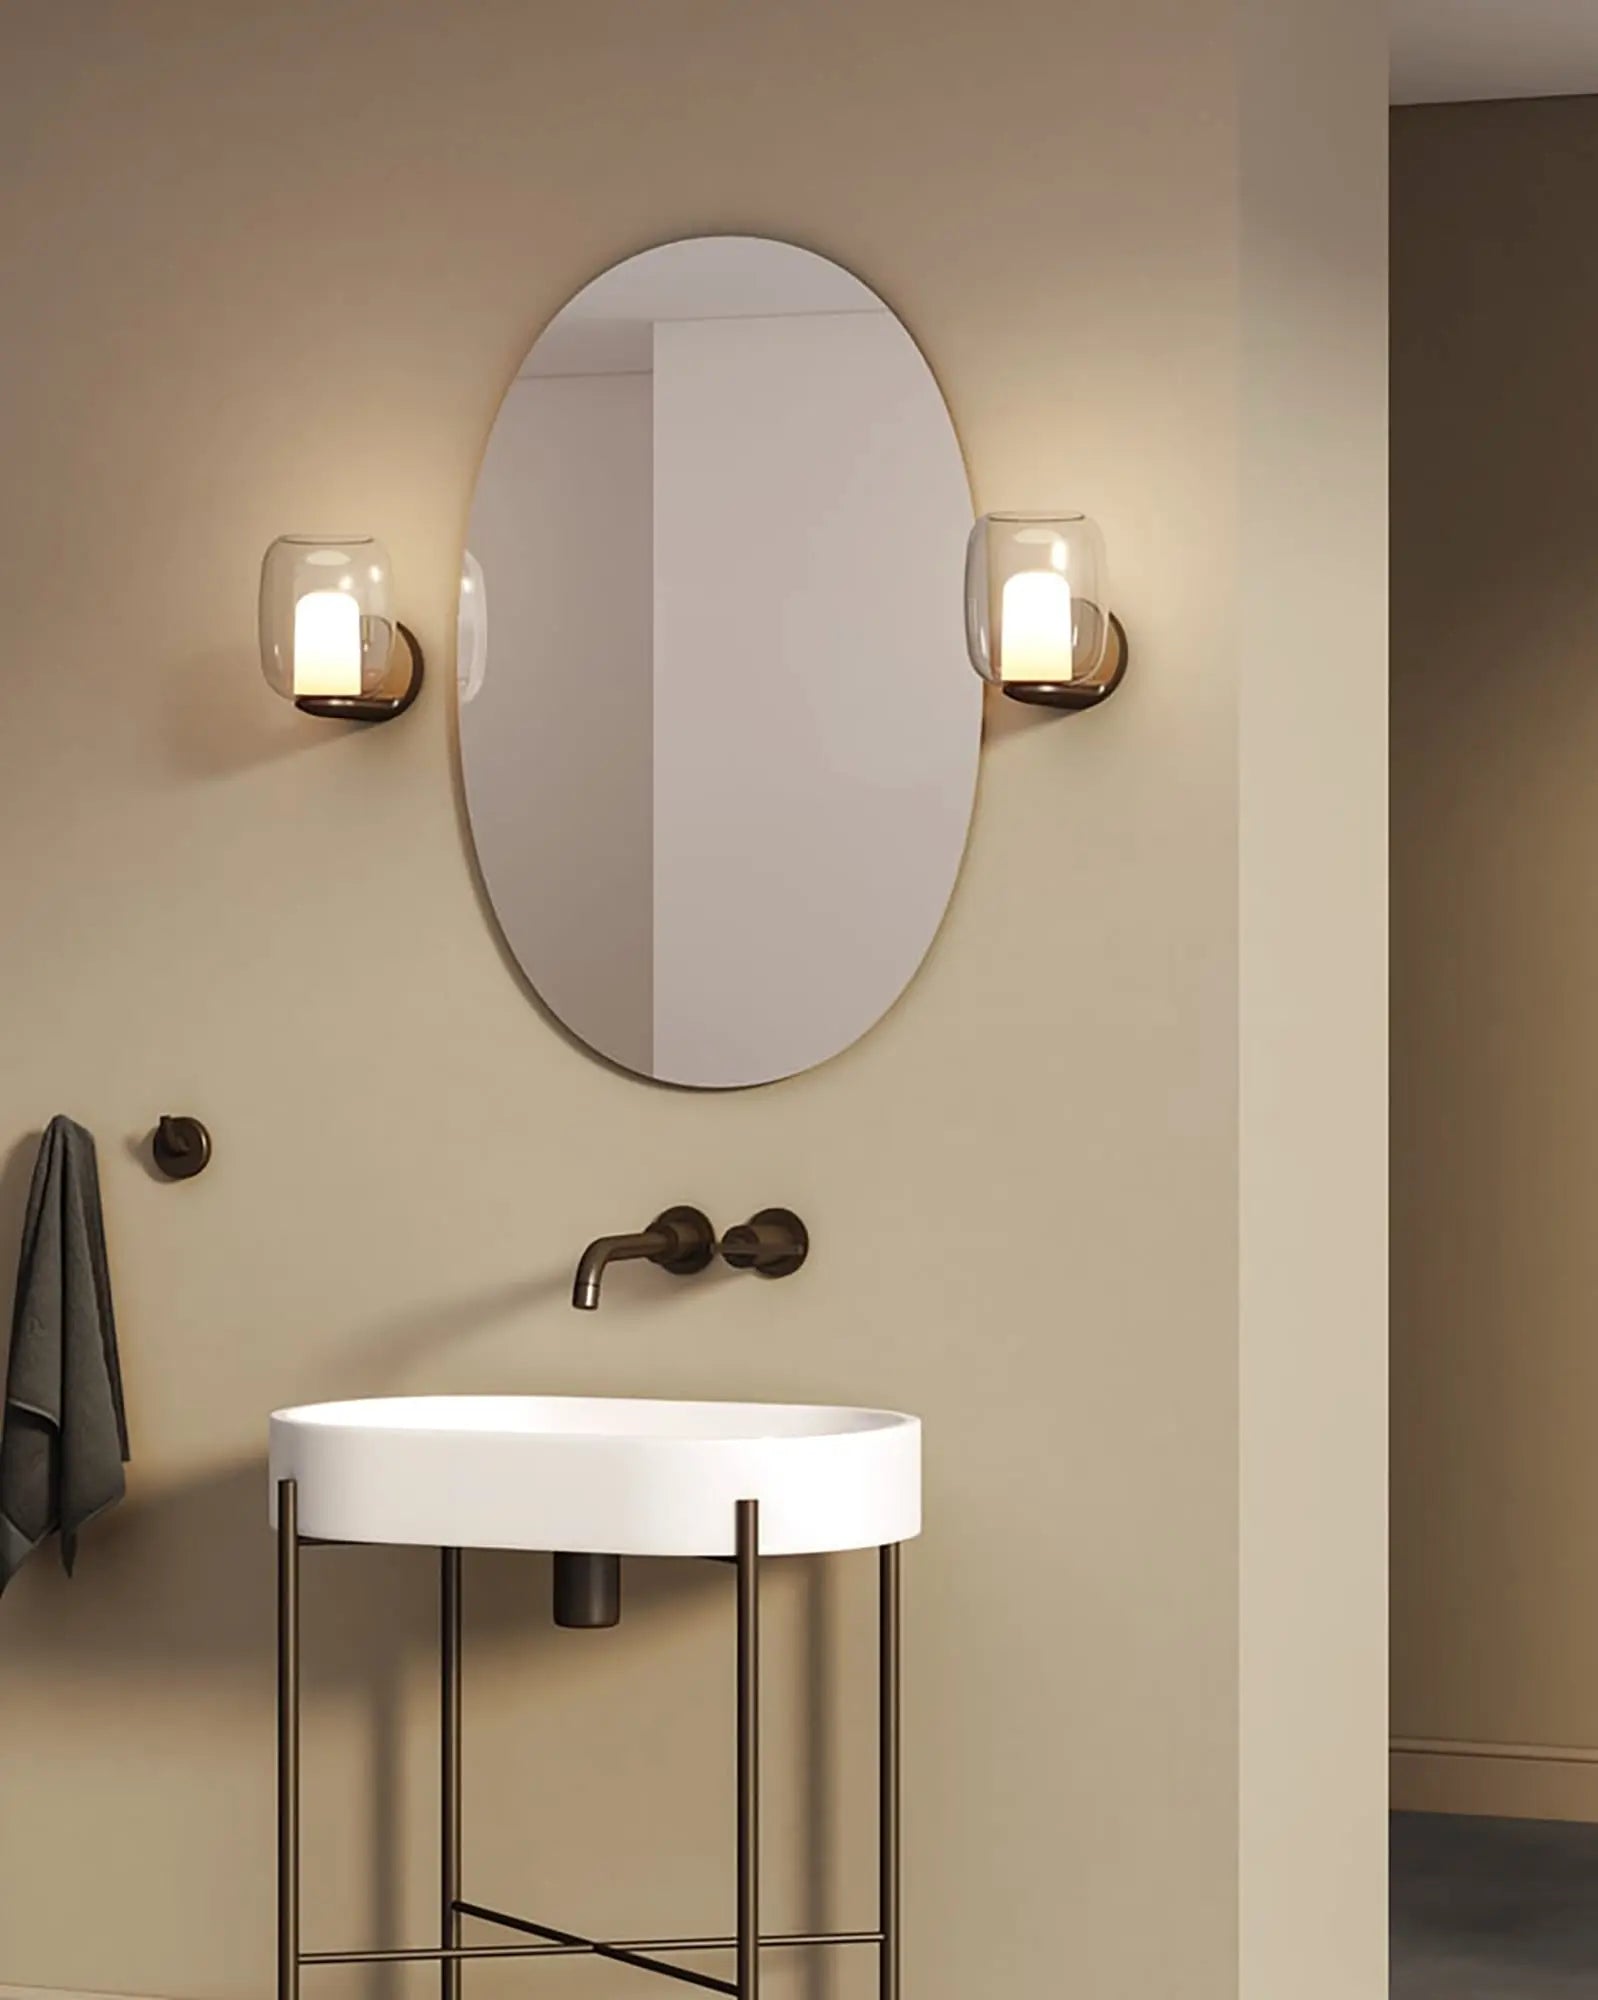 Aquina contemporary bathroom wall light on mirror sides